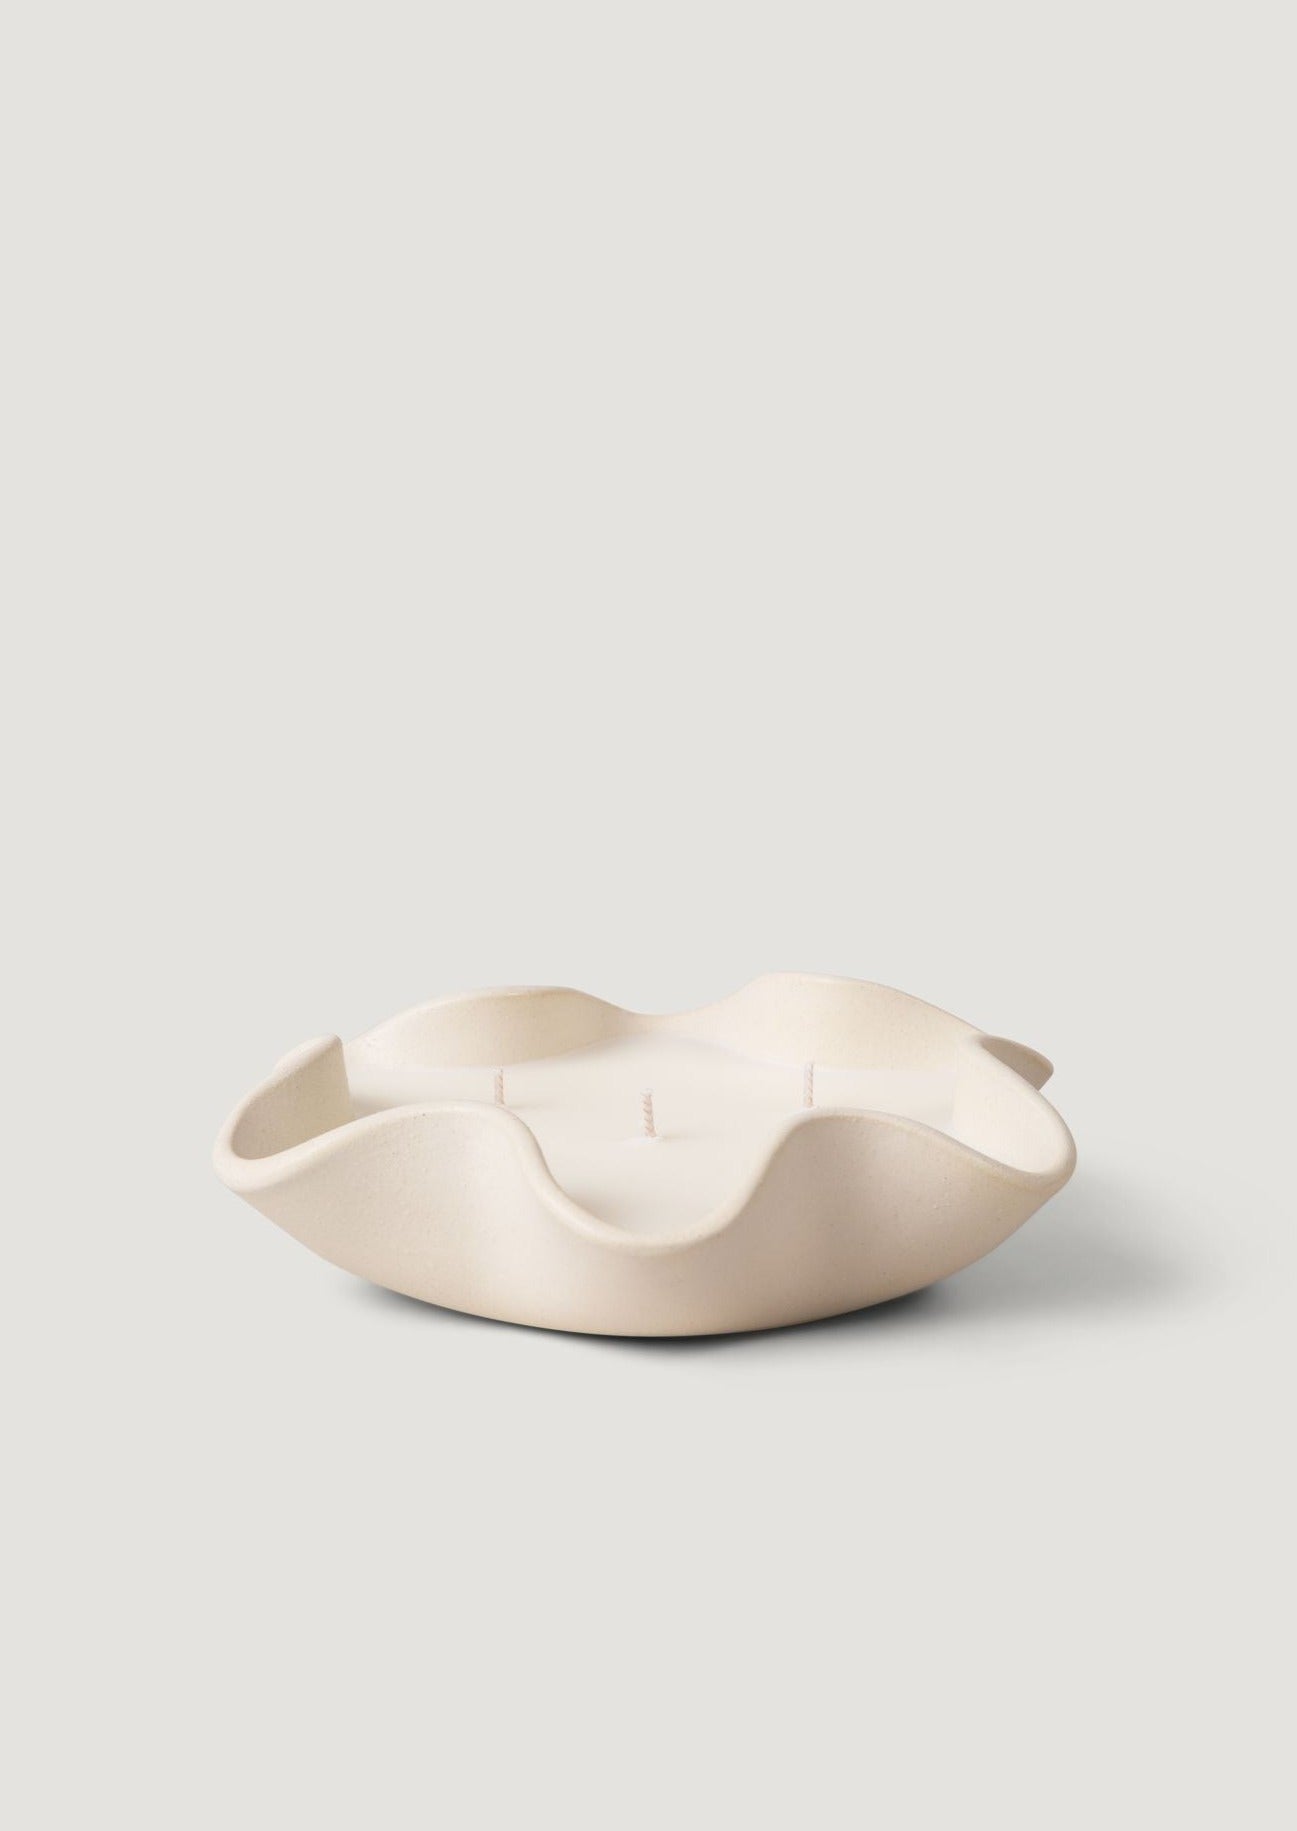 Jill Candle in Handmade Ceramic Ruffle Bowl